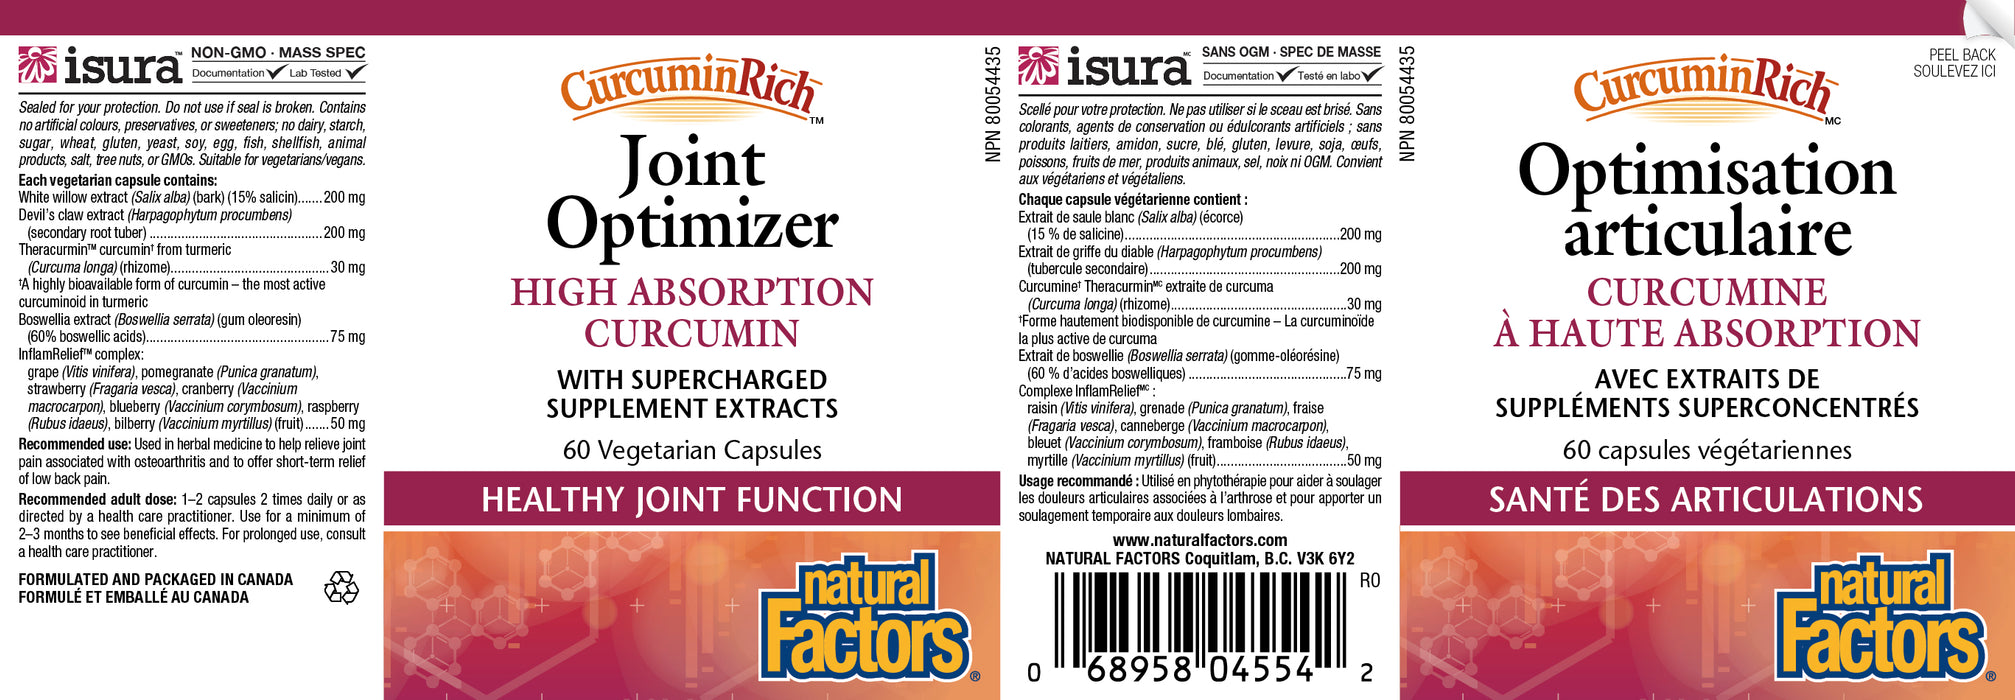 Natural Factors CurcuminRich Joint Optimizer 60 Veg Capsules